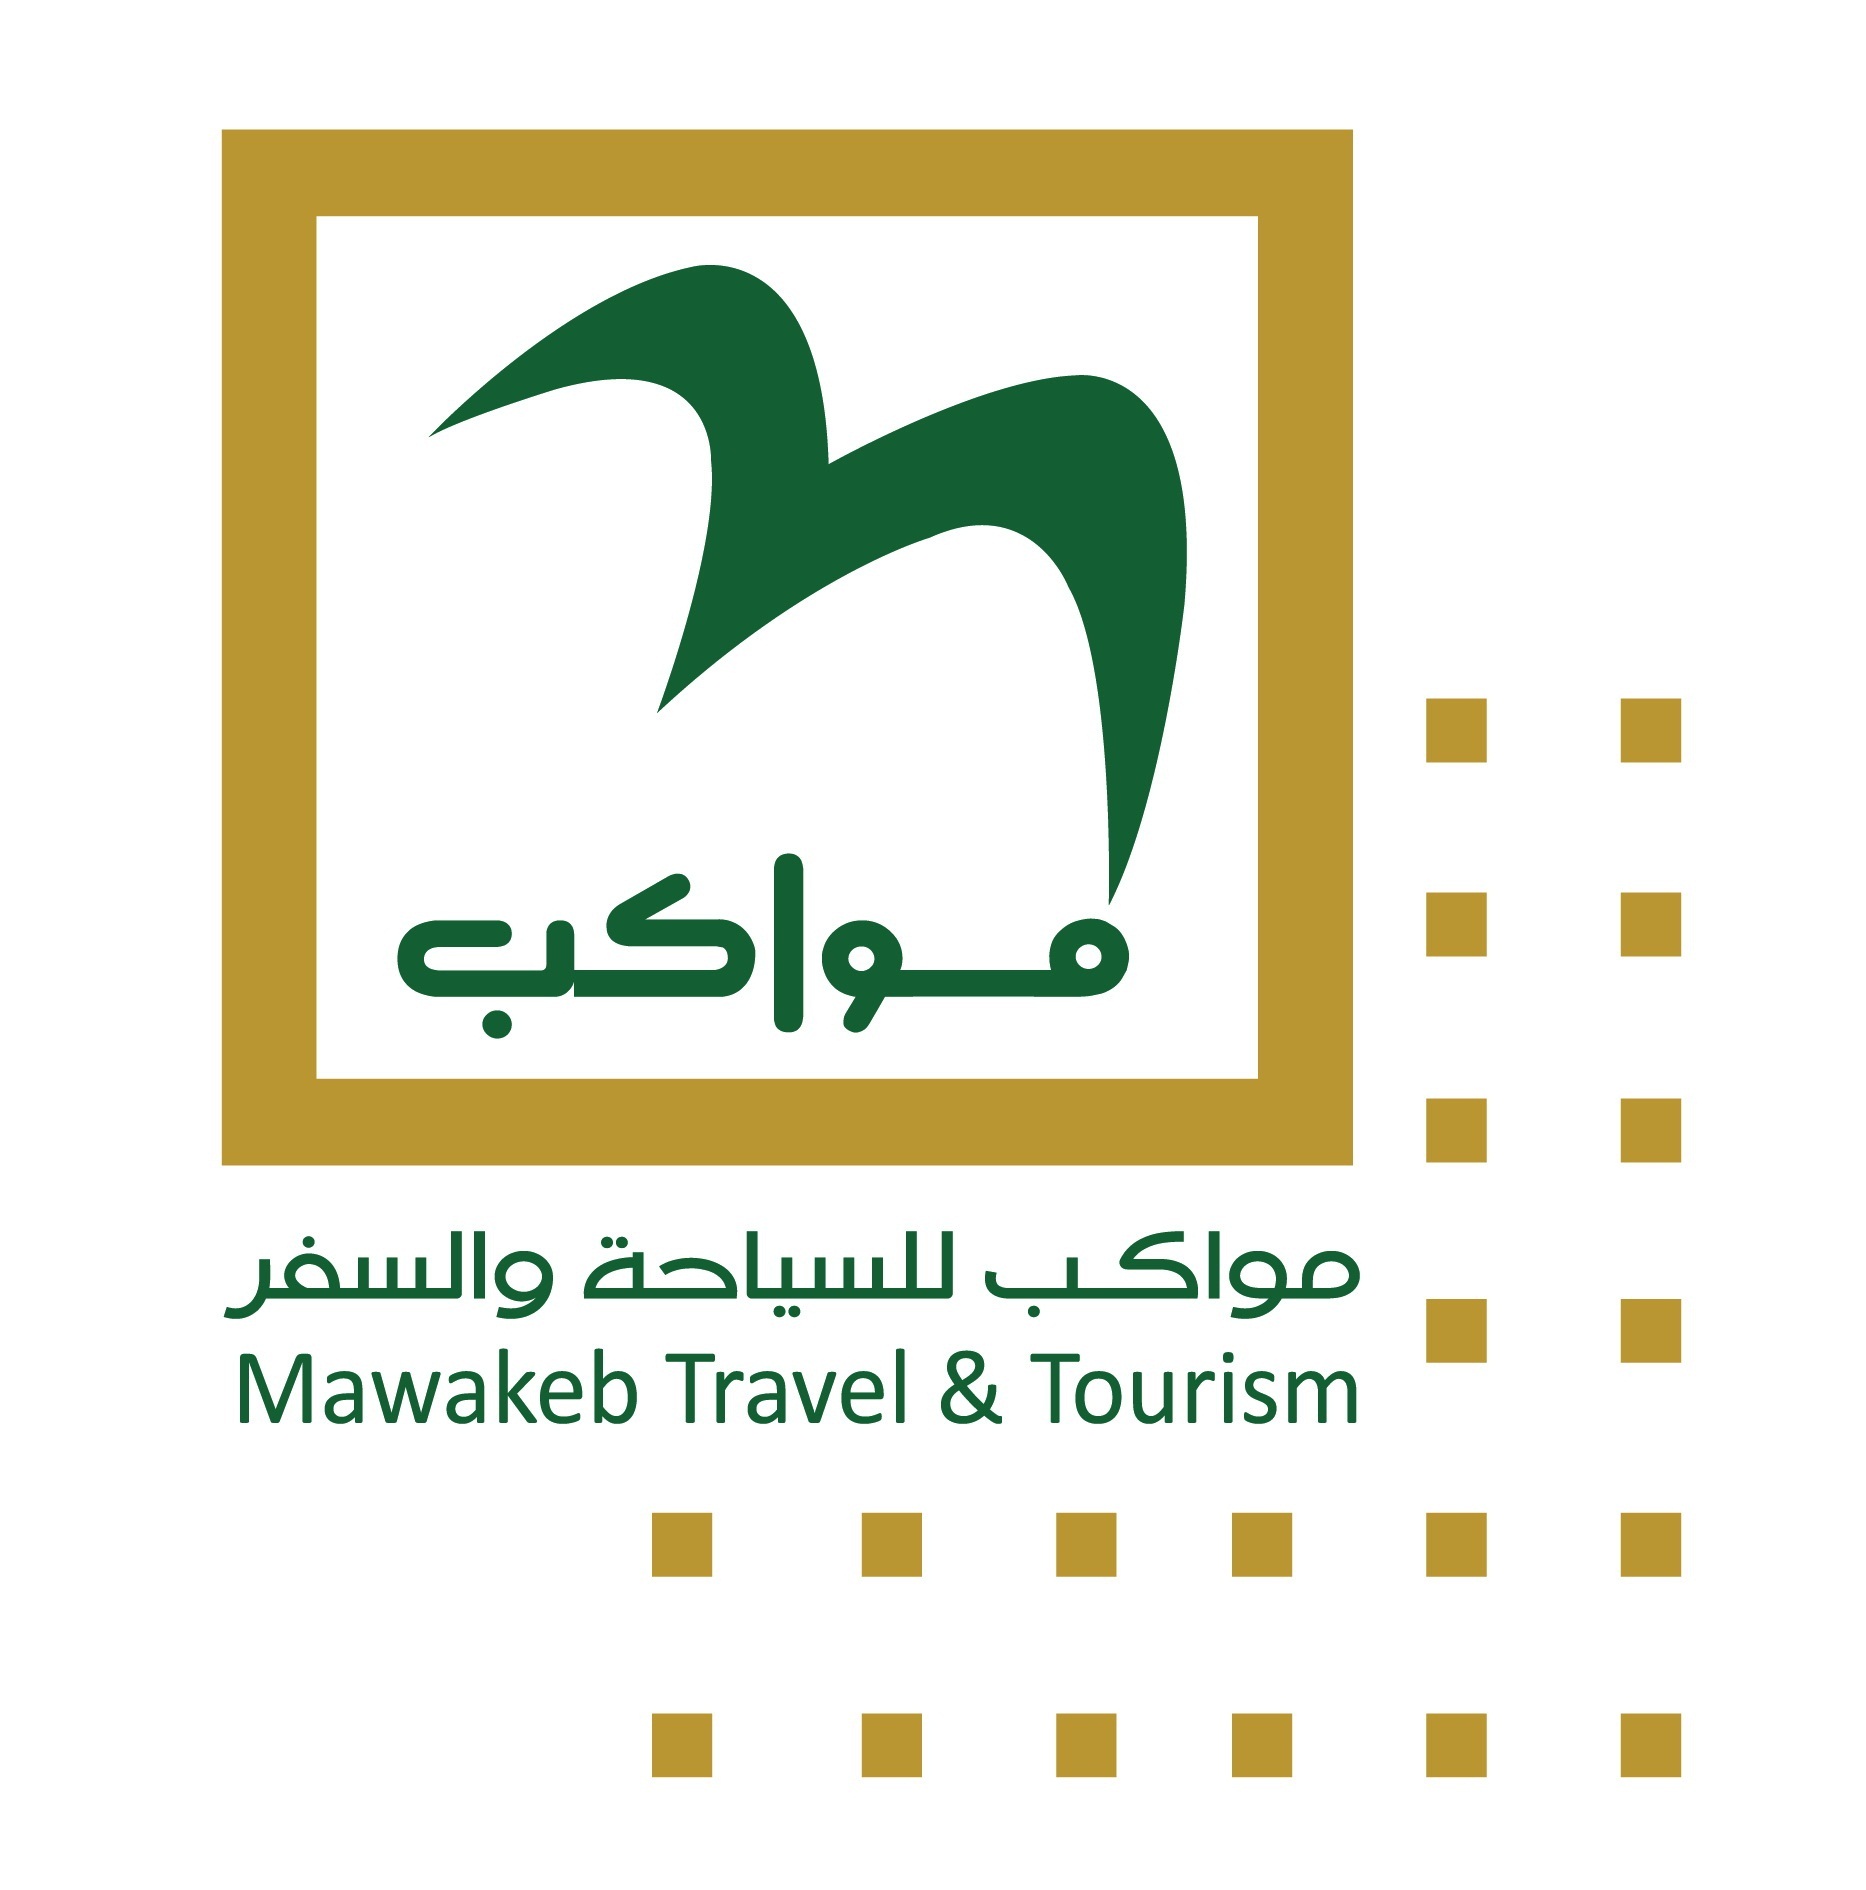 mawakeb travel & tourism